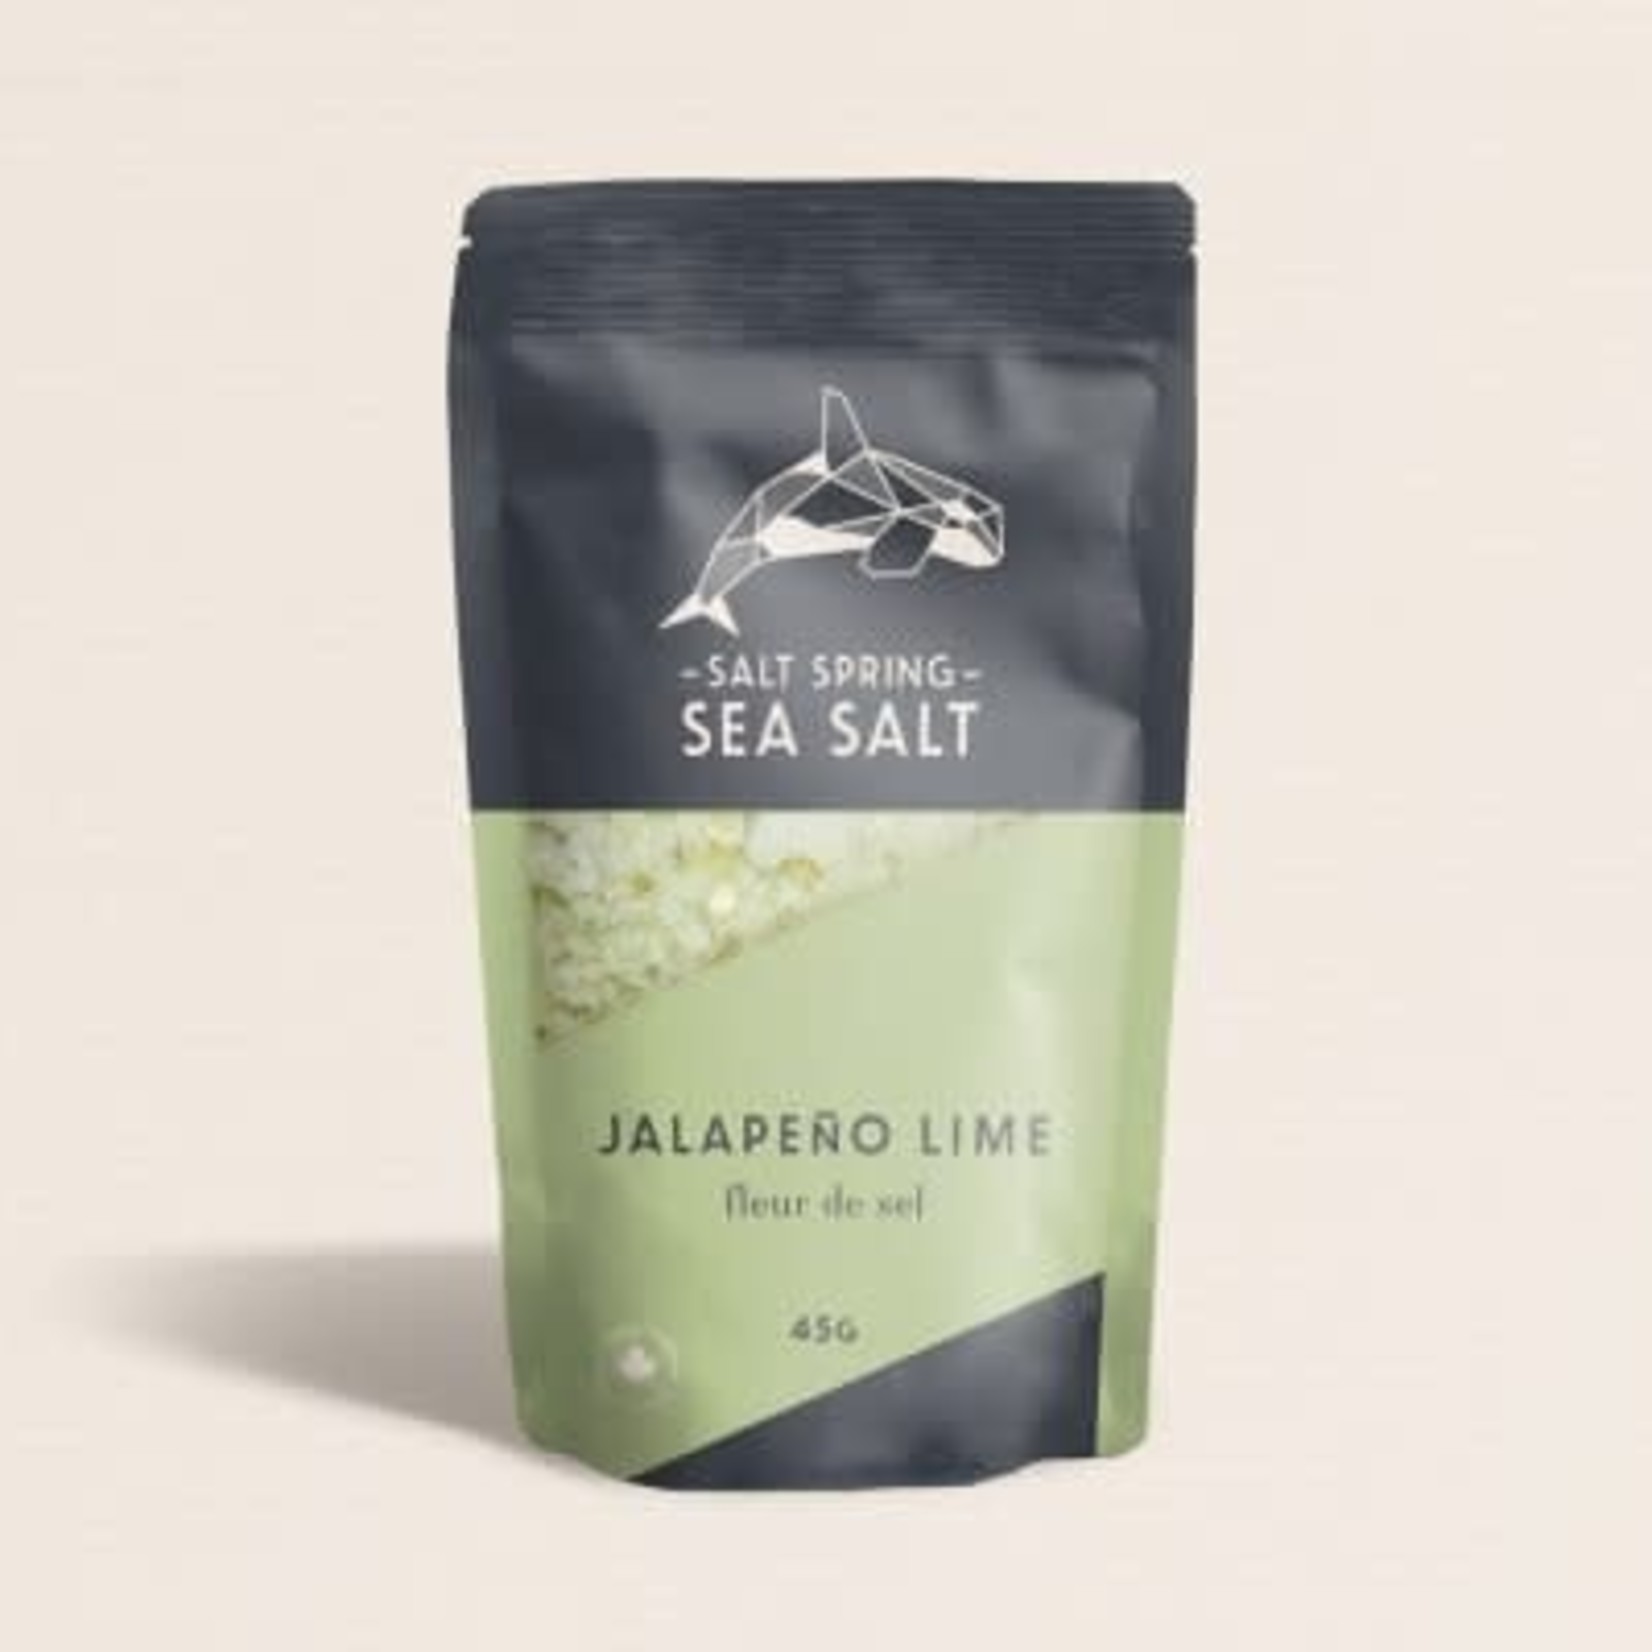 Salt Spring Fleur de sel - Jalapeno Lime